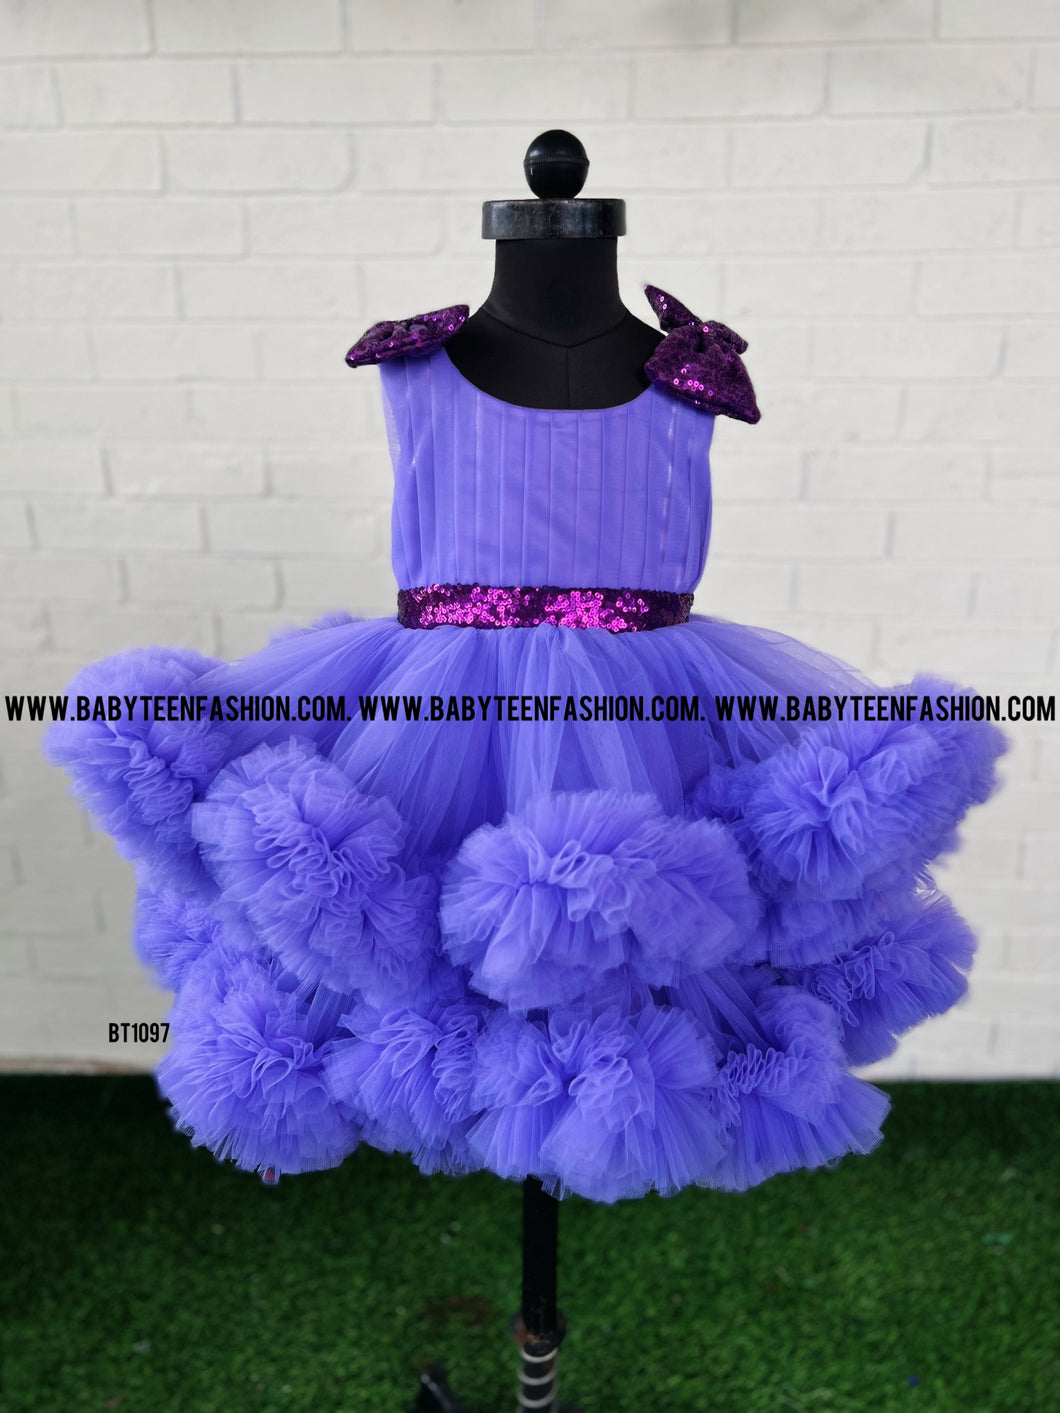 BT1097 Lavender Dream Sparkle Dress – Let Her Shine Bright